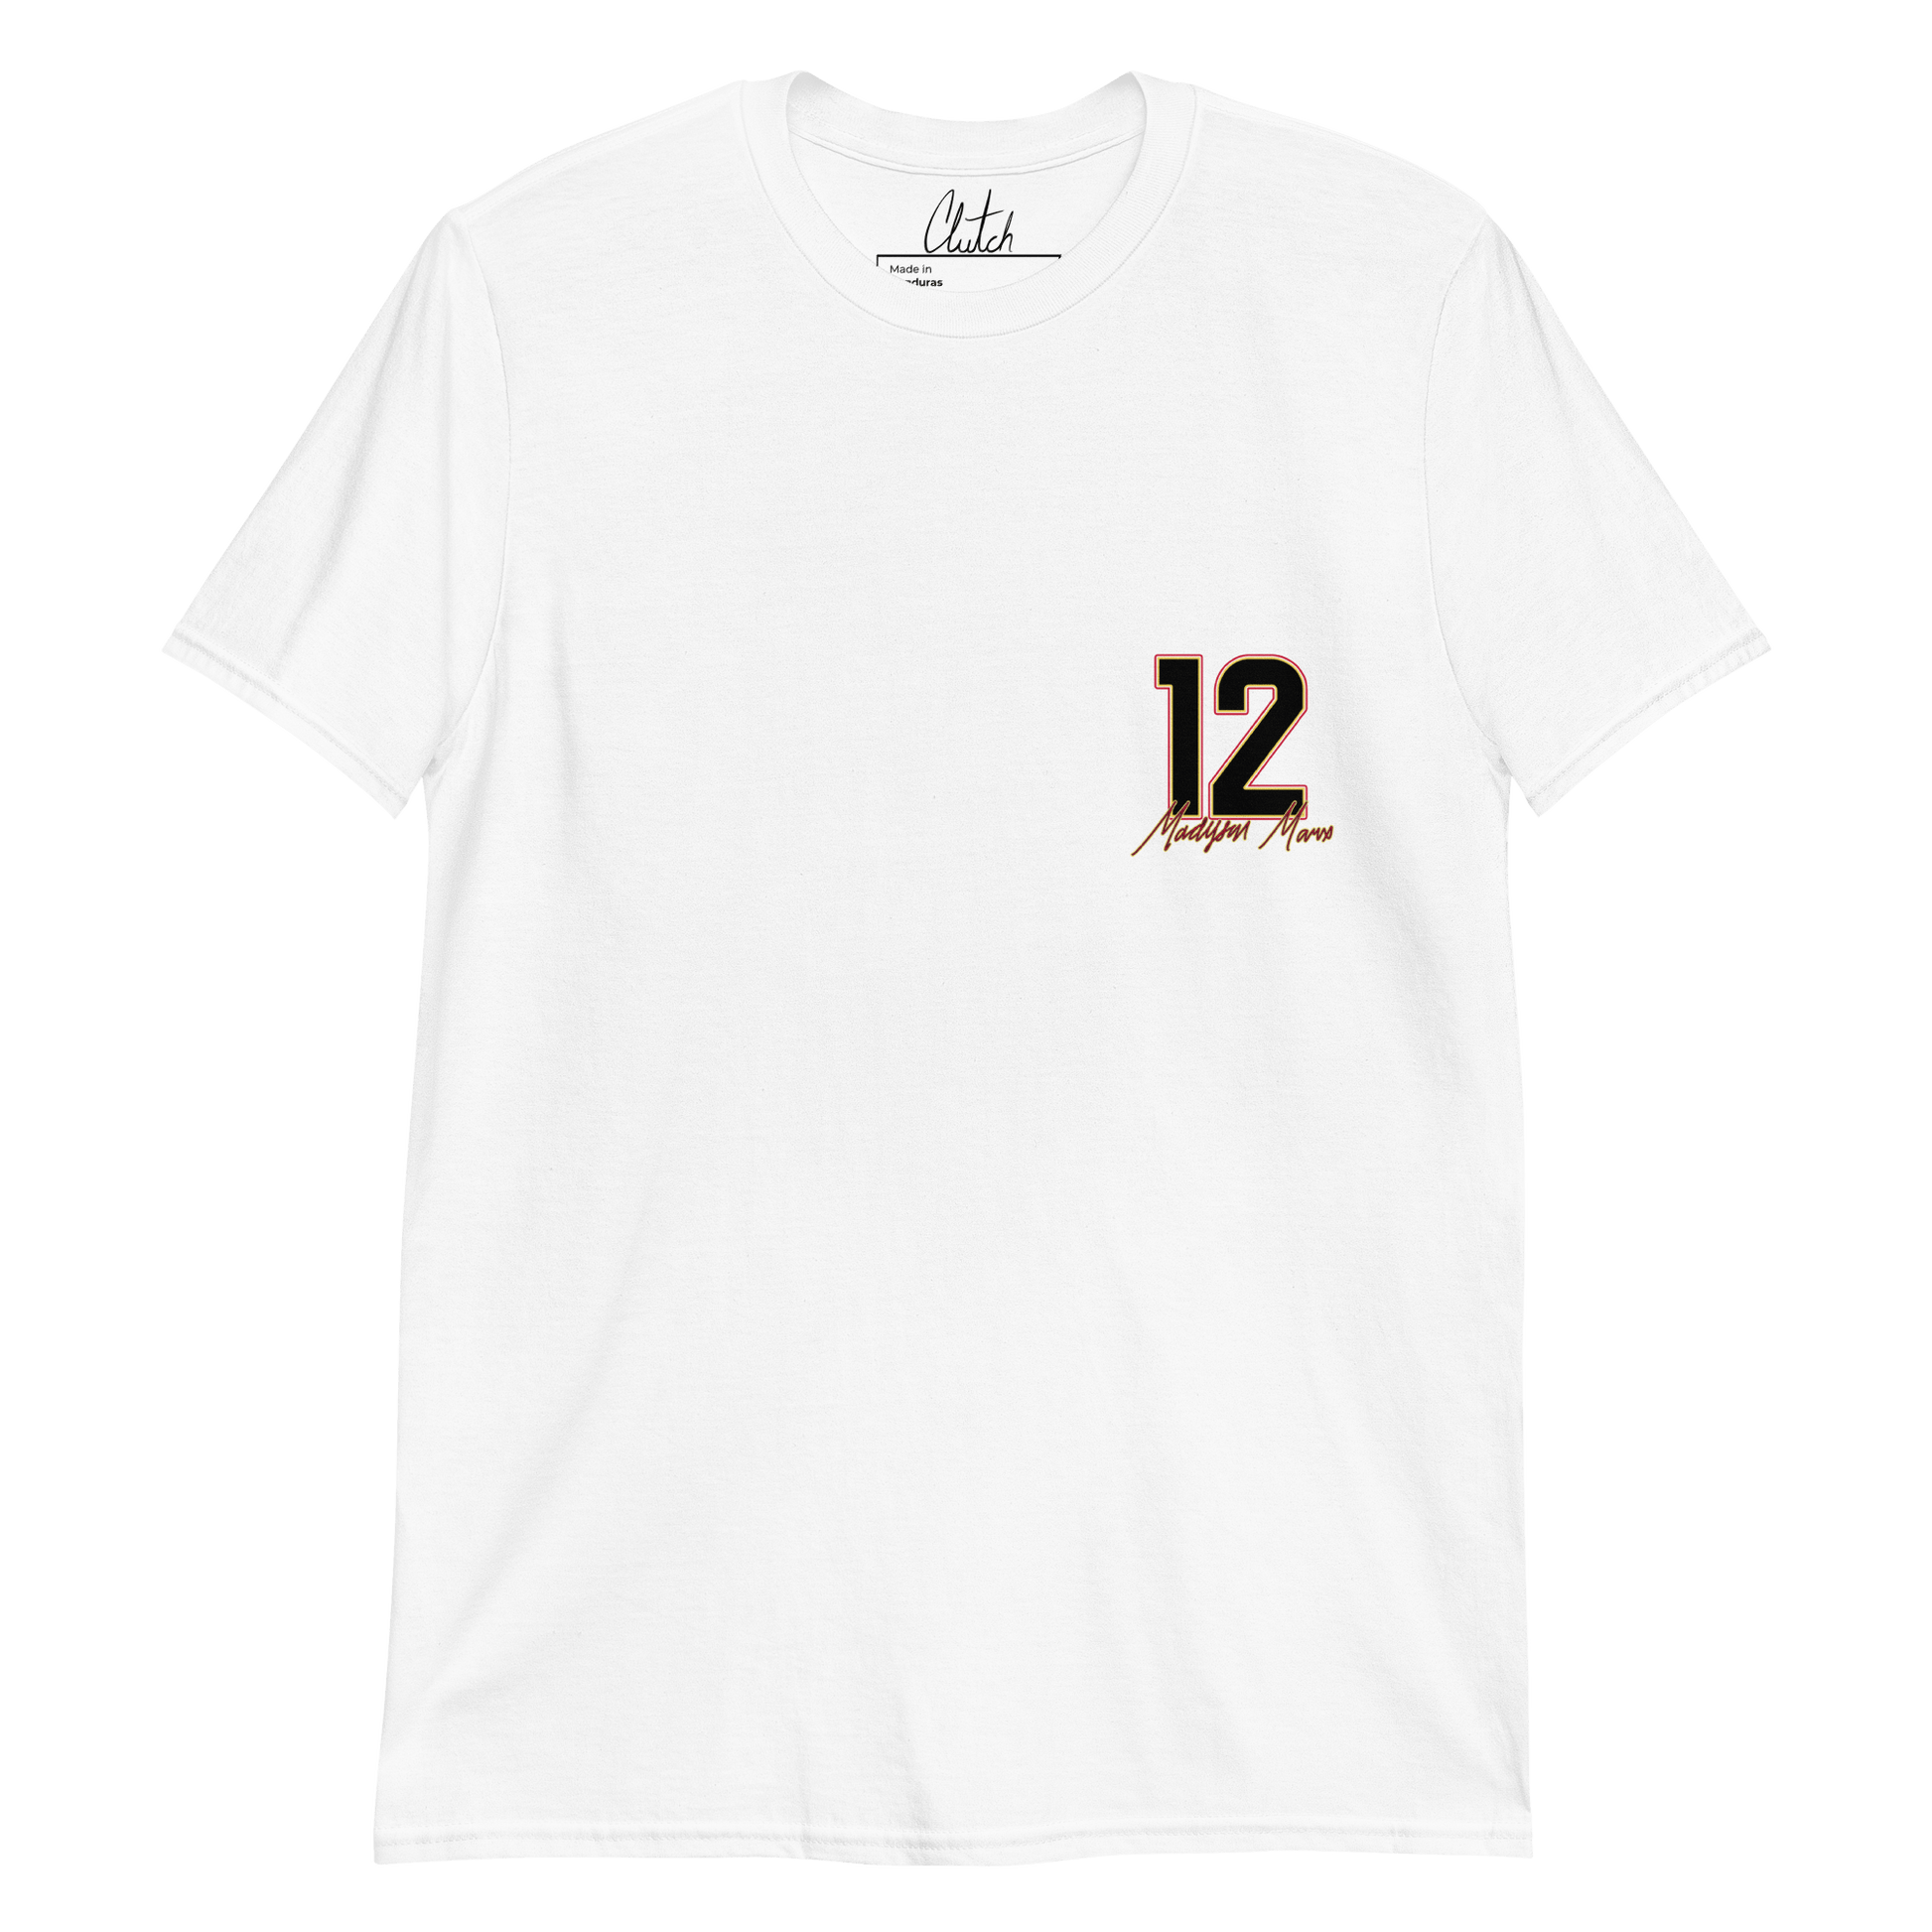 Madyson Marx | Mural & Patch T-shirt - Clutch -